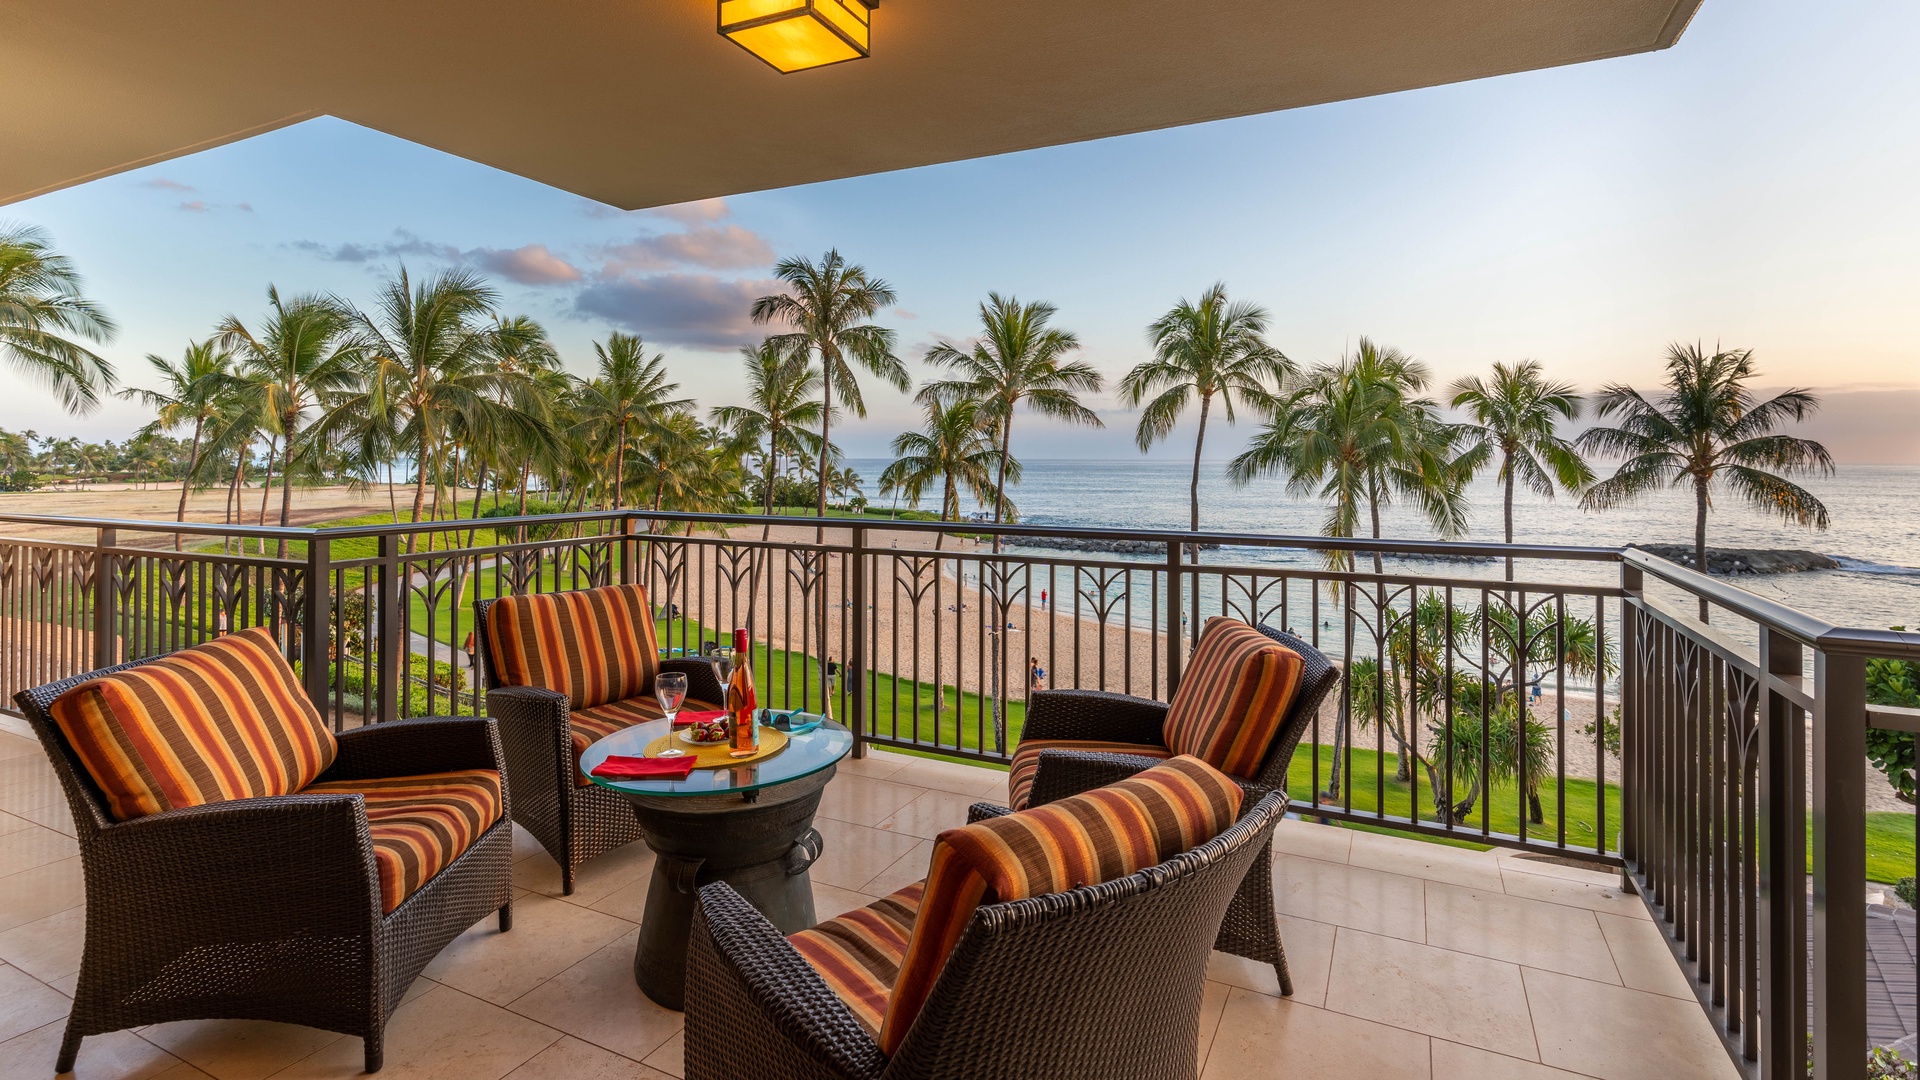 Kapolei Vacation Rentals, Ko Olina Beach Villas B310 - Indoor / outdoor entertaining surrounded by swaying palm trees.